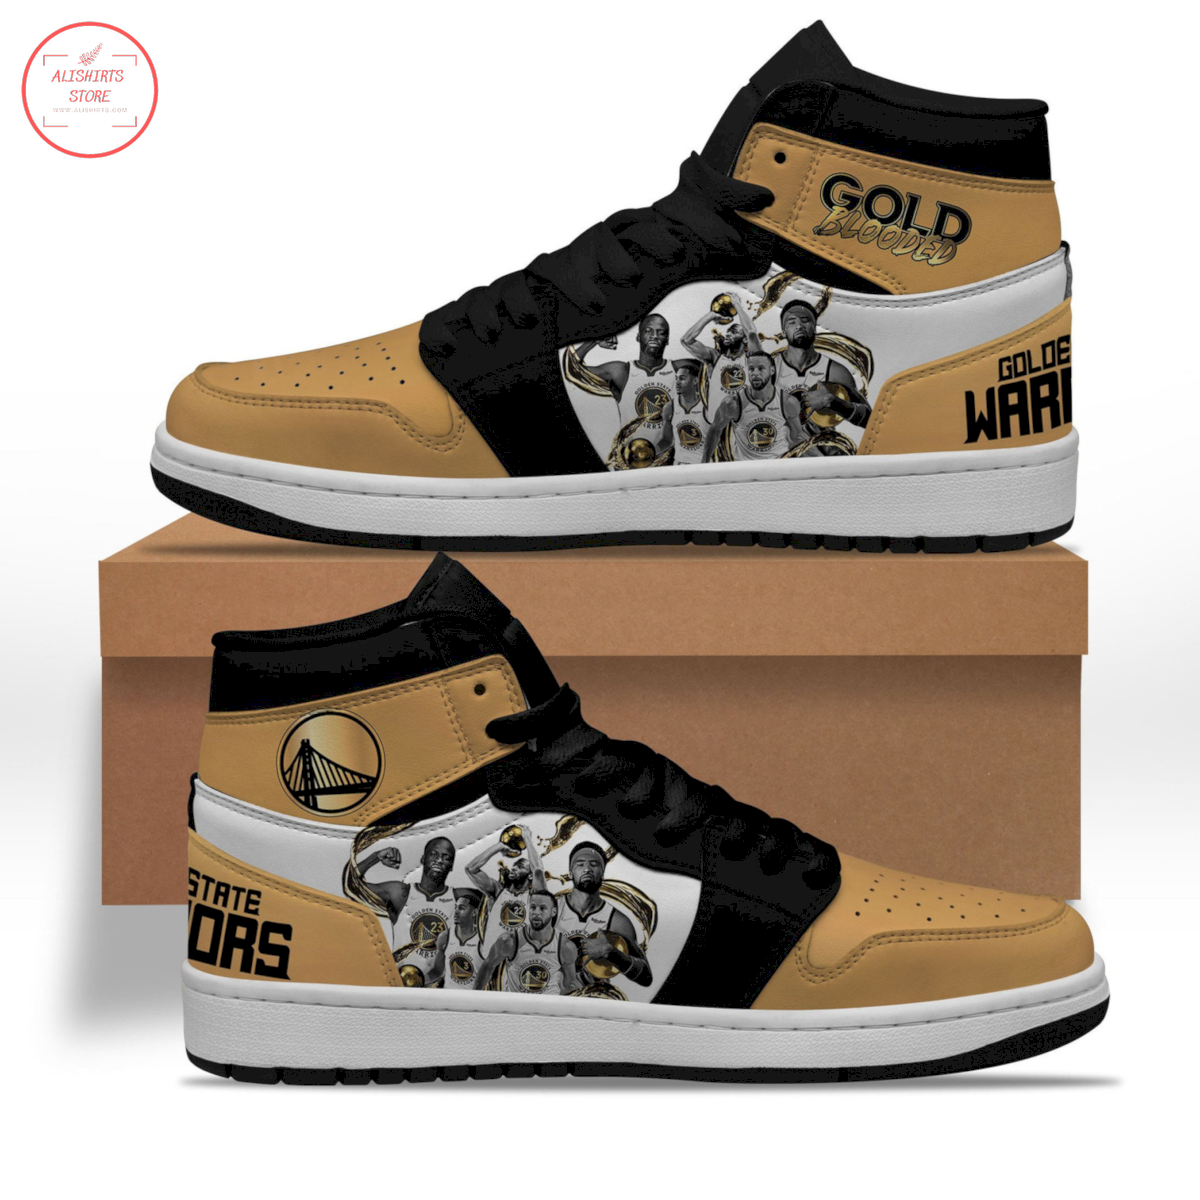 Golden State Warriors Gold Blooded High Air Jordan 1 Sneakers